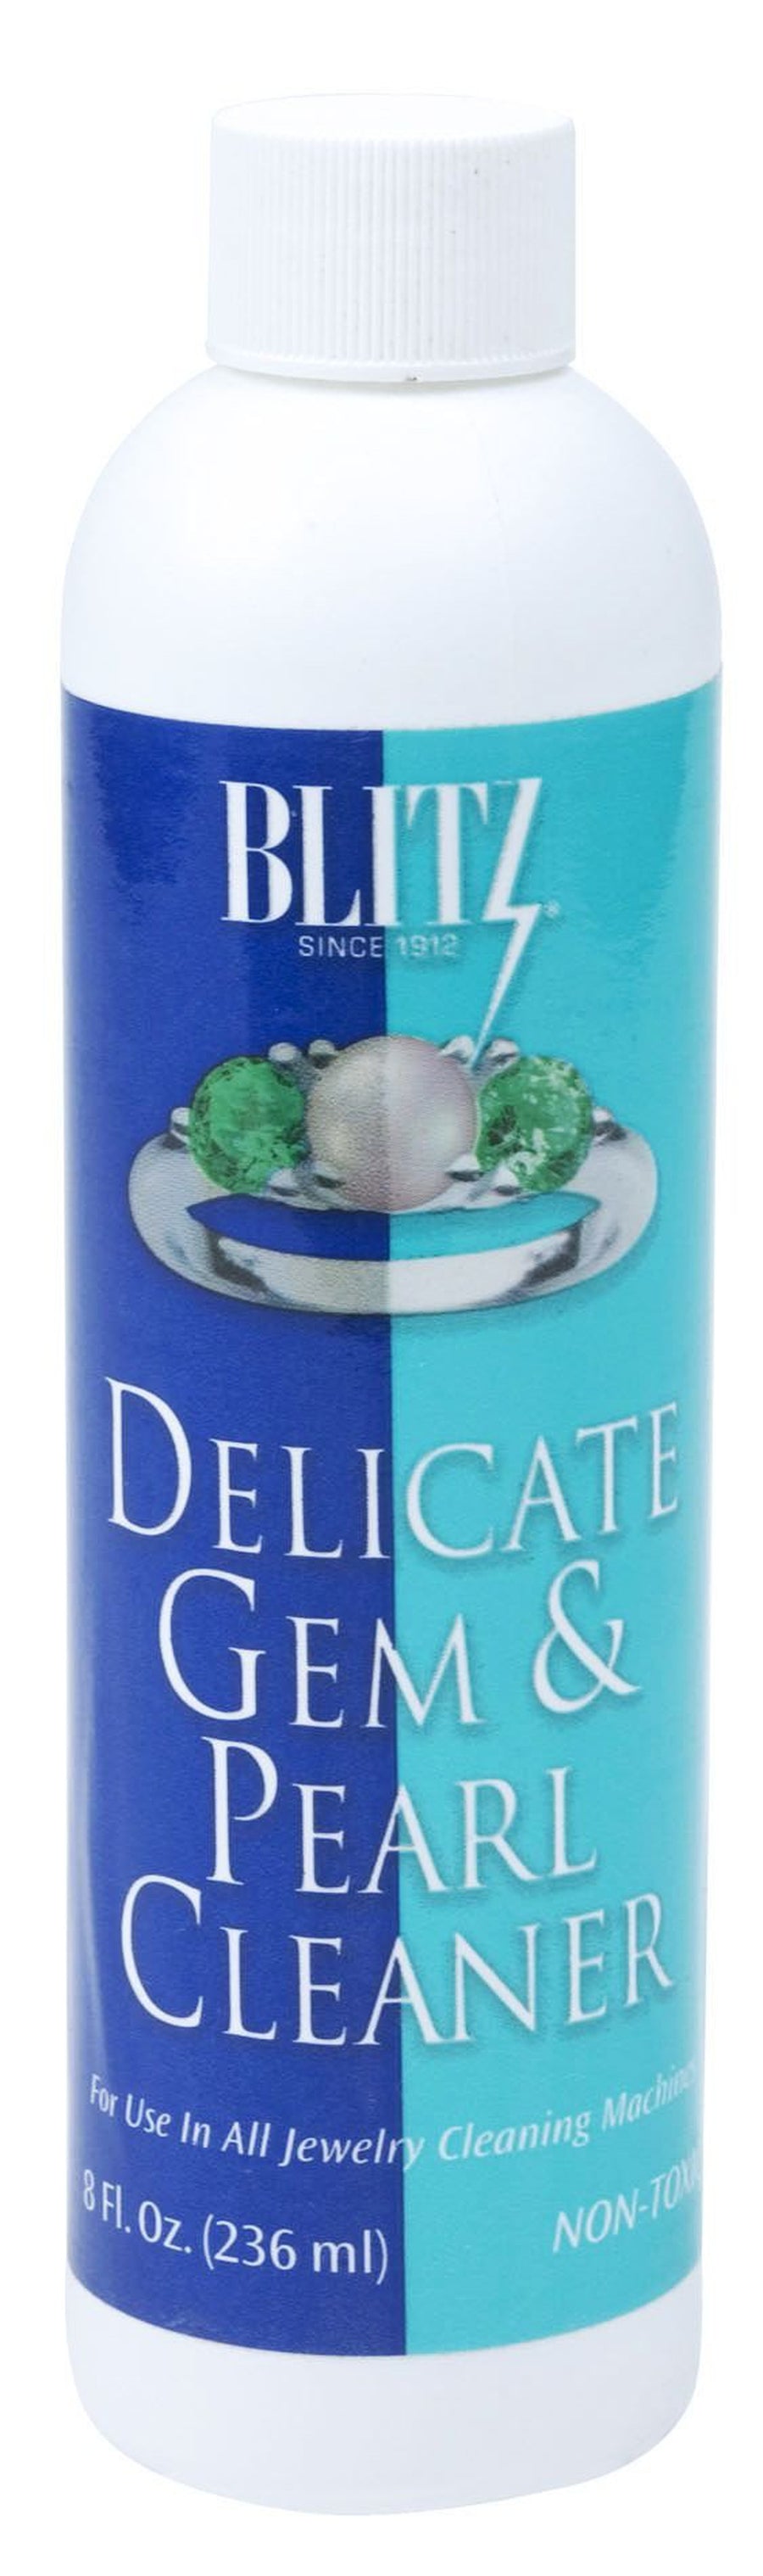 Delicate Gem & Pearl Cleaner